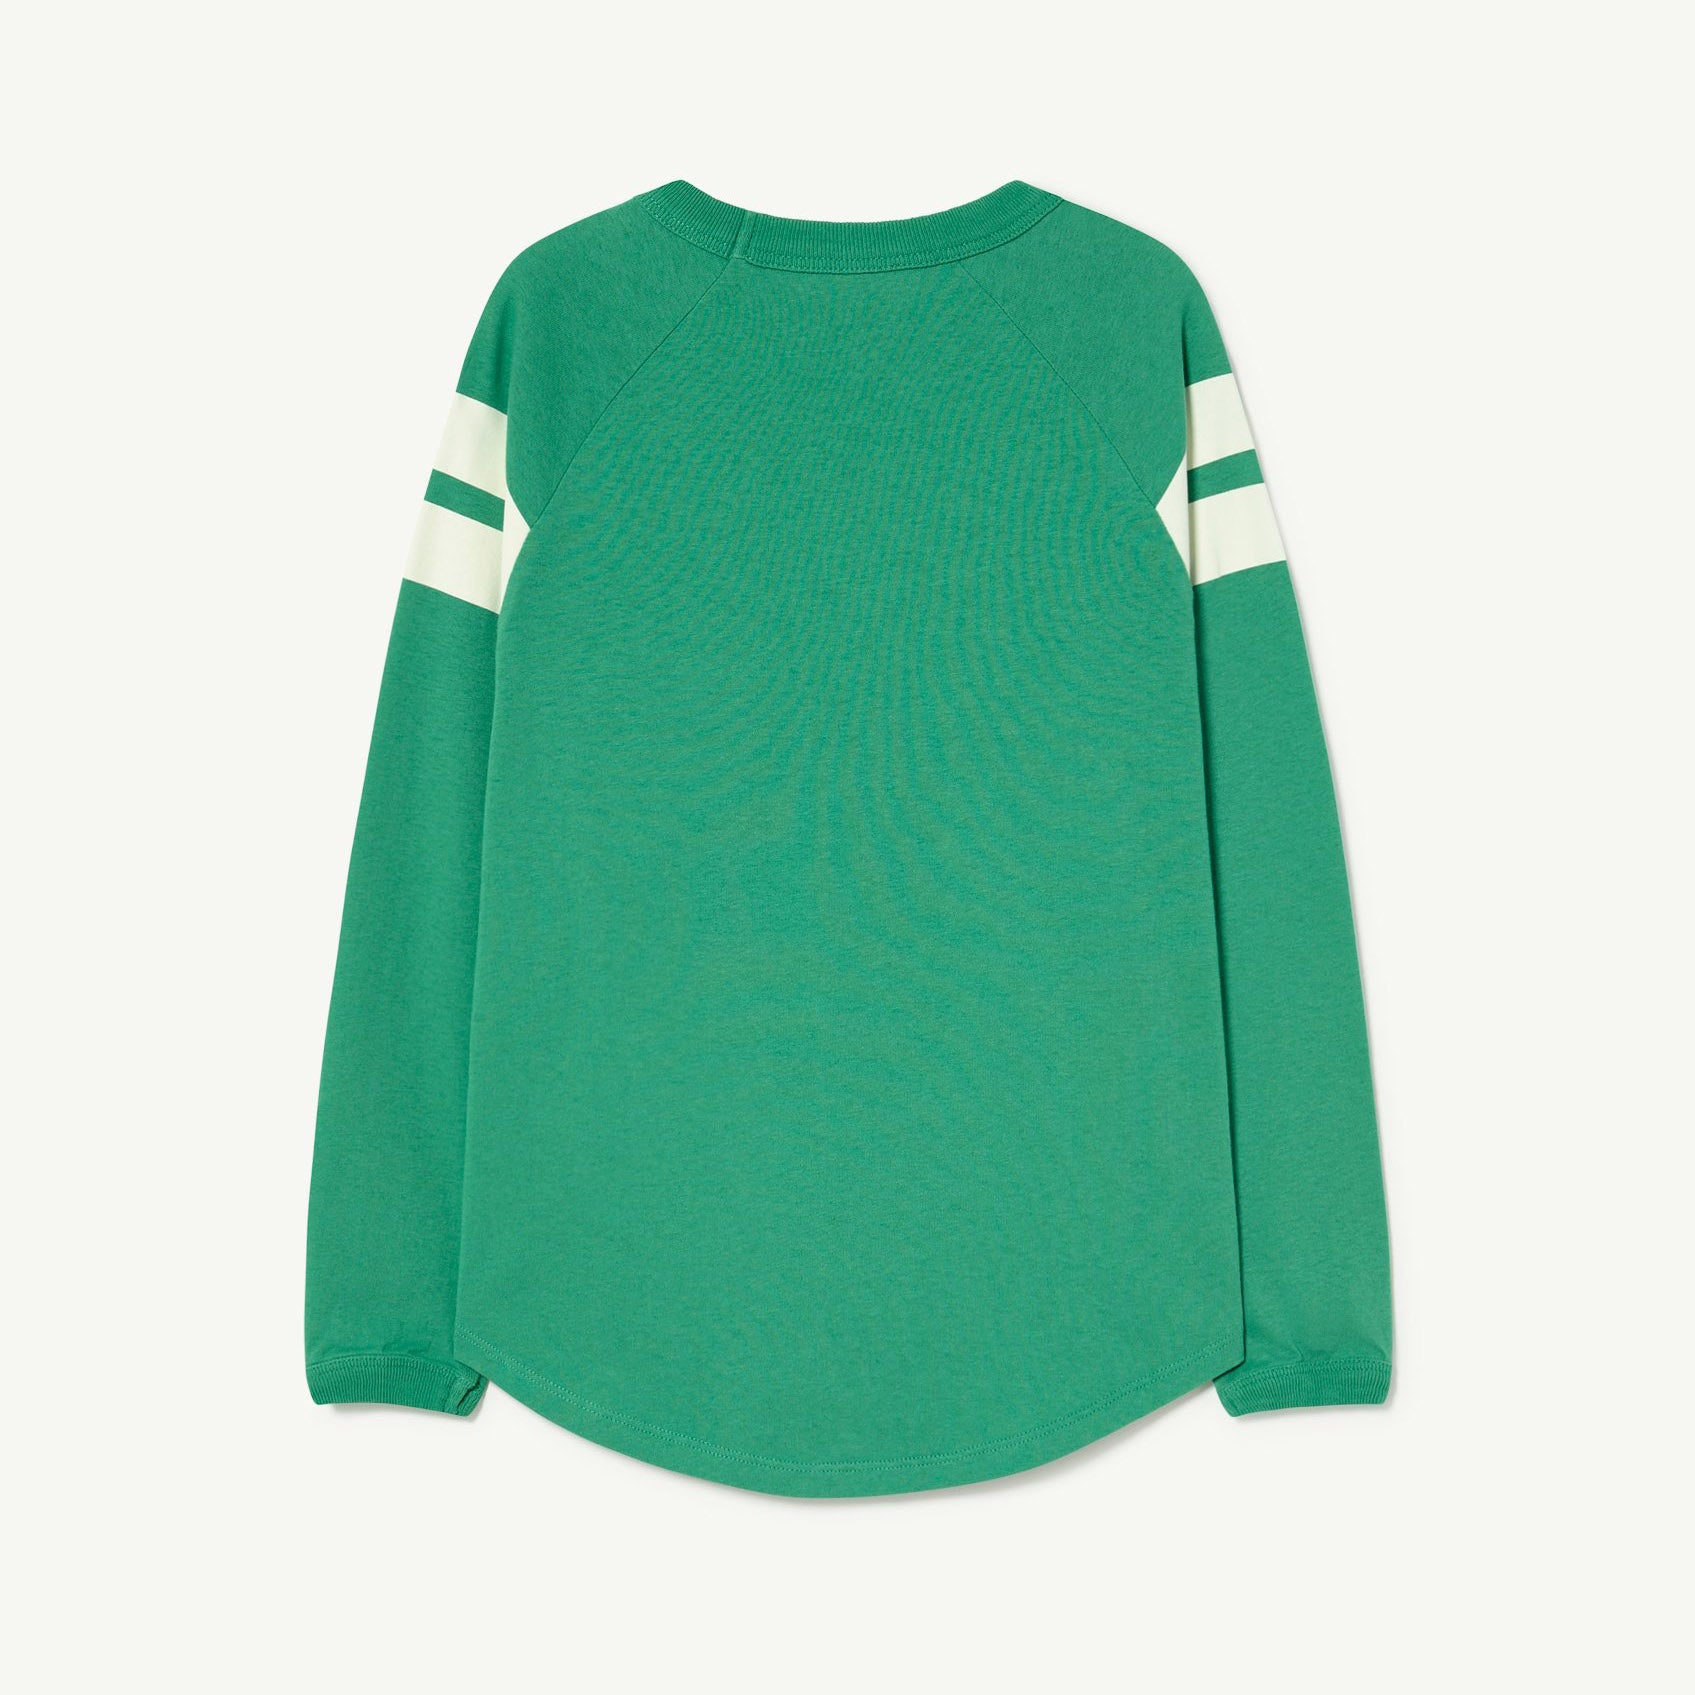 Boys & Girls Green Logo Cotton T-Shirt